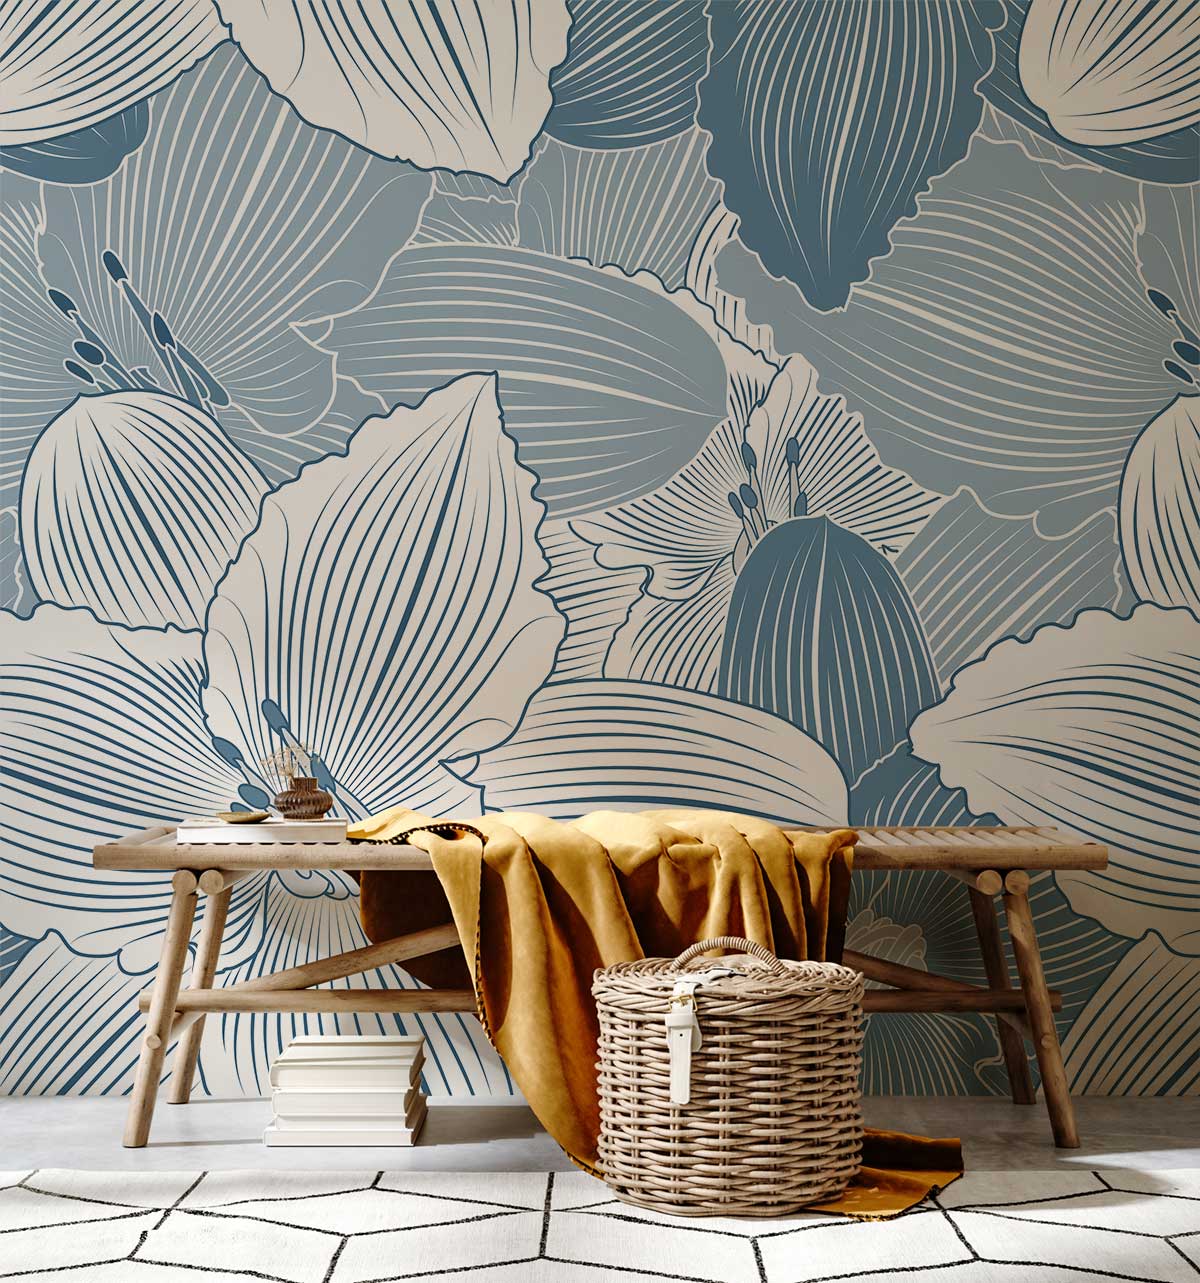 Blue Lily Flower Wallpaper Decoration Idea